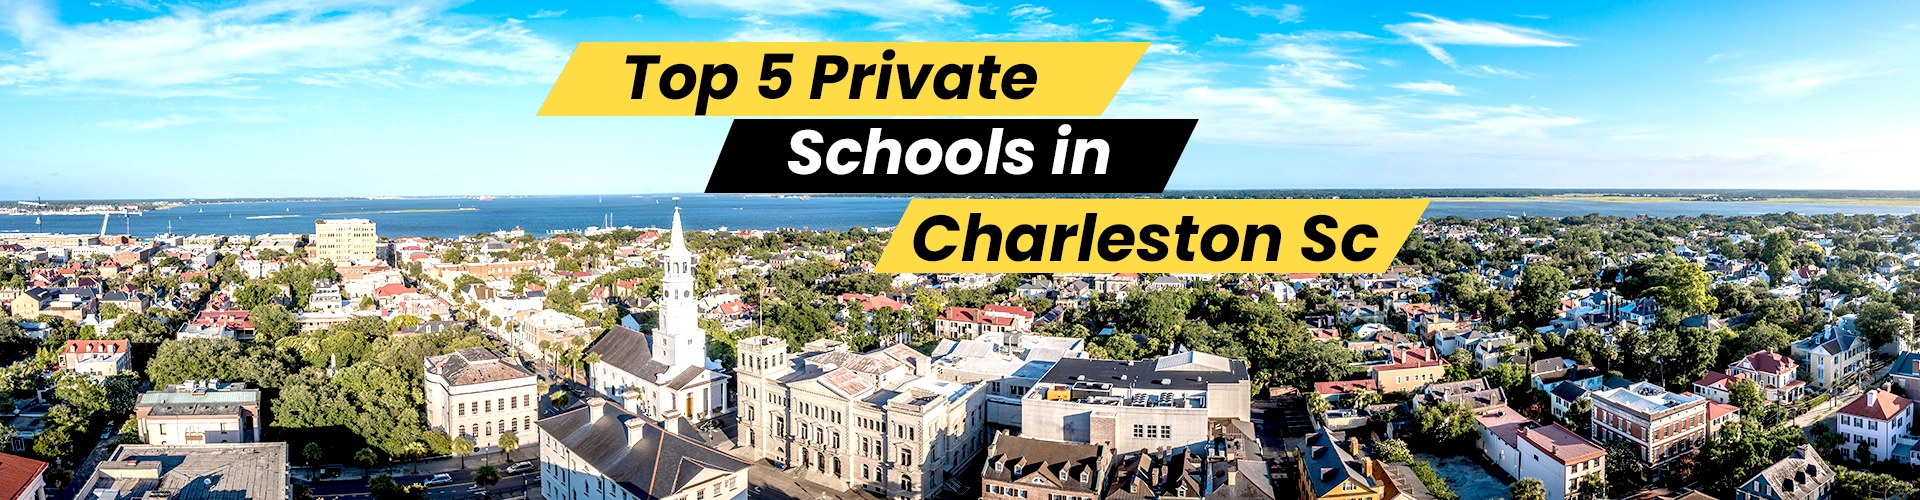 top 5 private schools in charleston